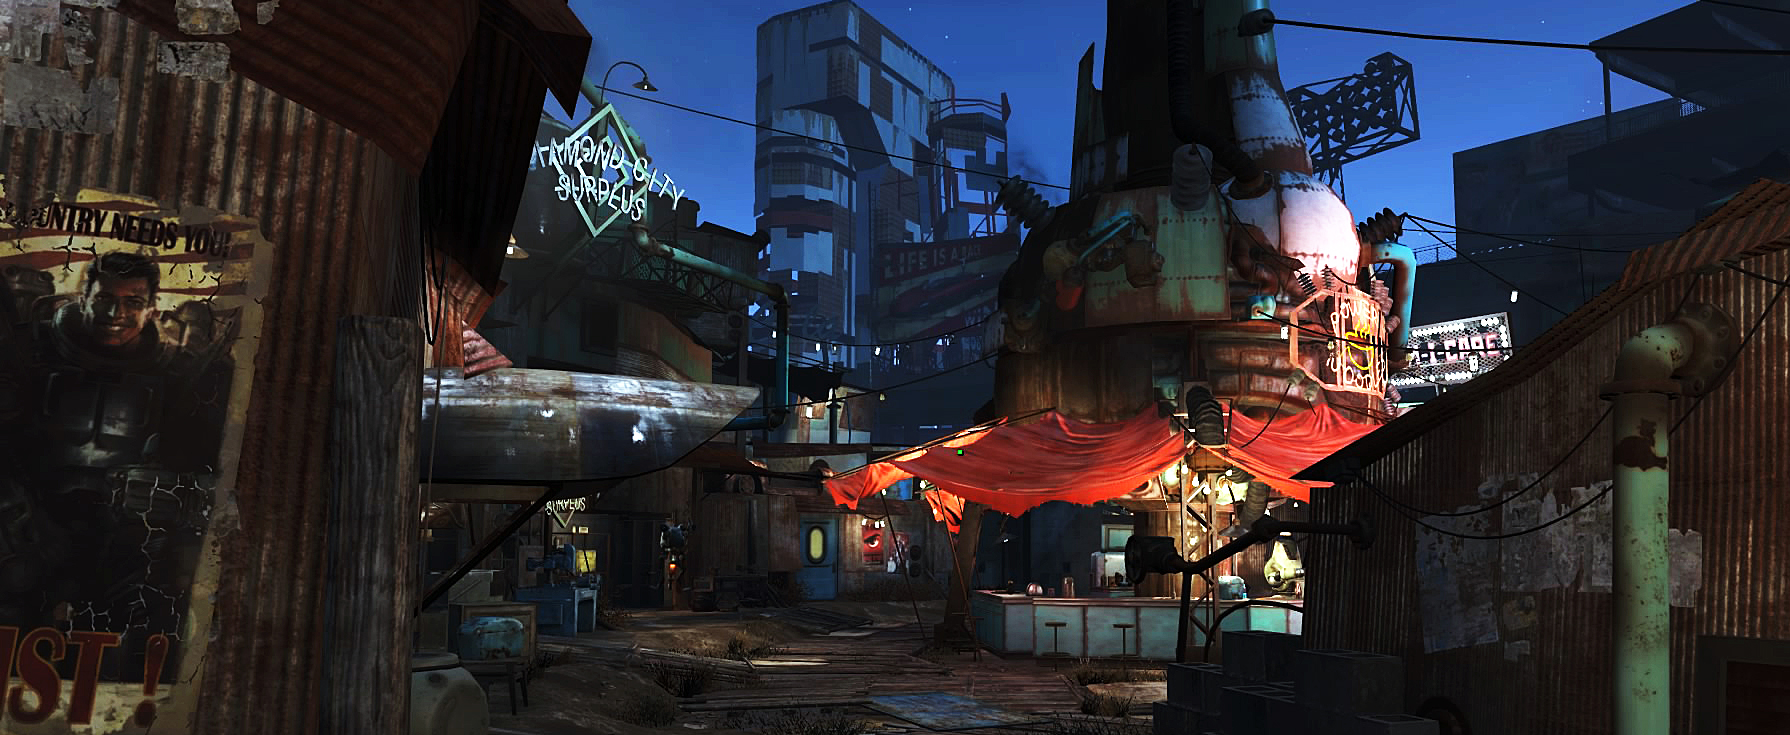 Diamond city in Fallout 4